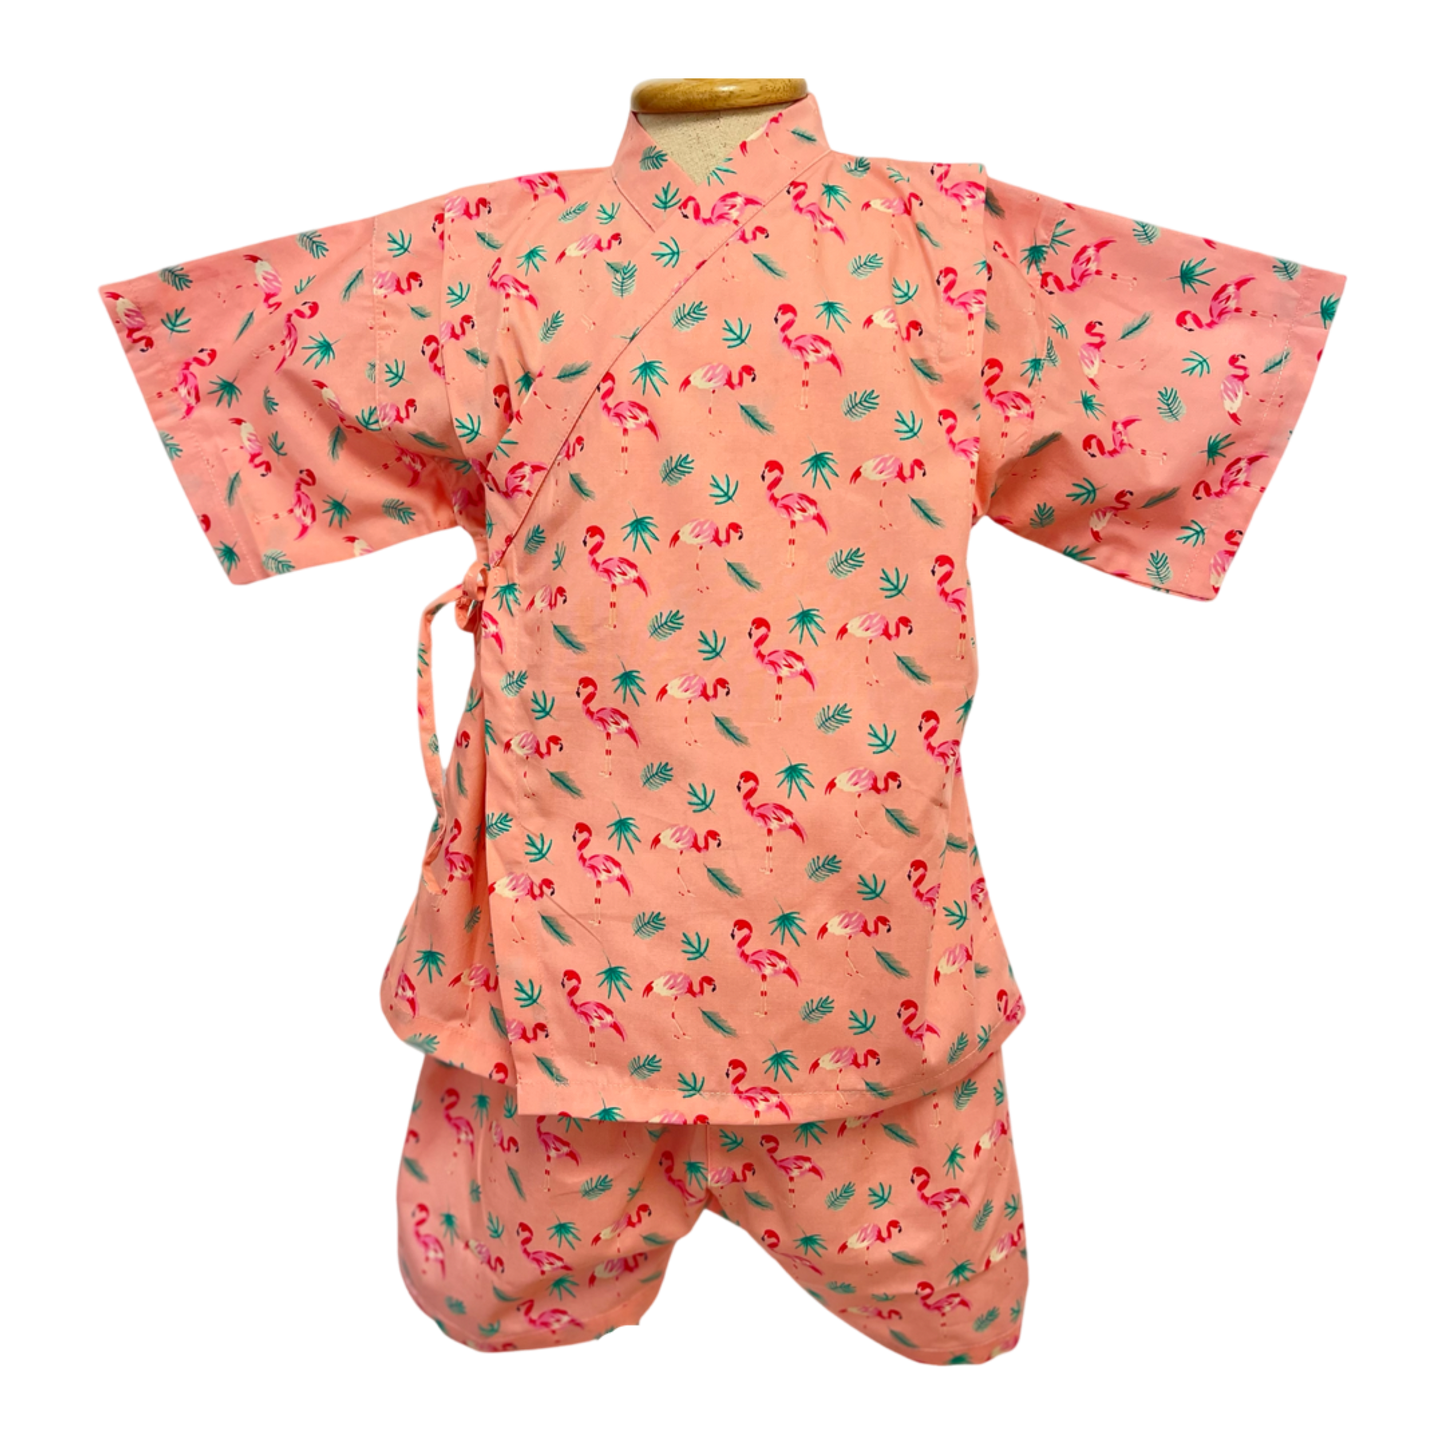 FUN Japanese Kimono Jinbei Kids Shirt + Pants Outfits Clothes 2Pcs/Set - Flamingo